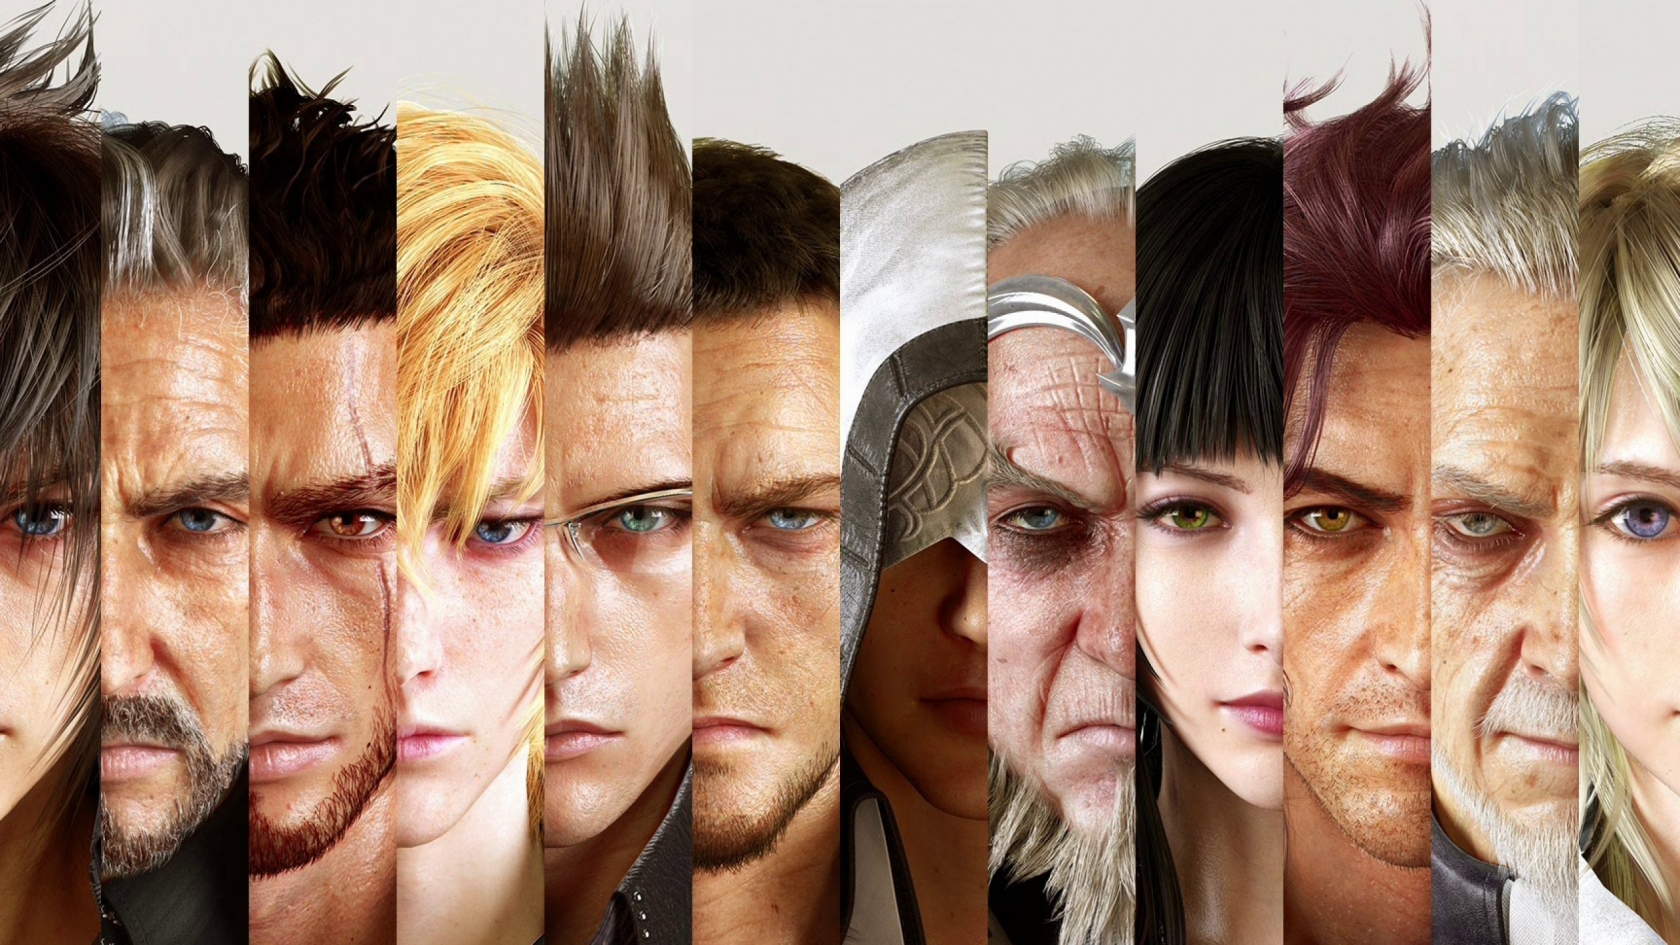 Final Fantasy XV Cast for 1680 x 945 HDTV resolution